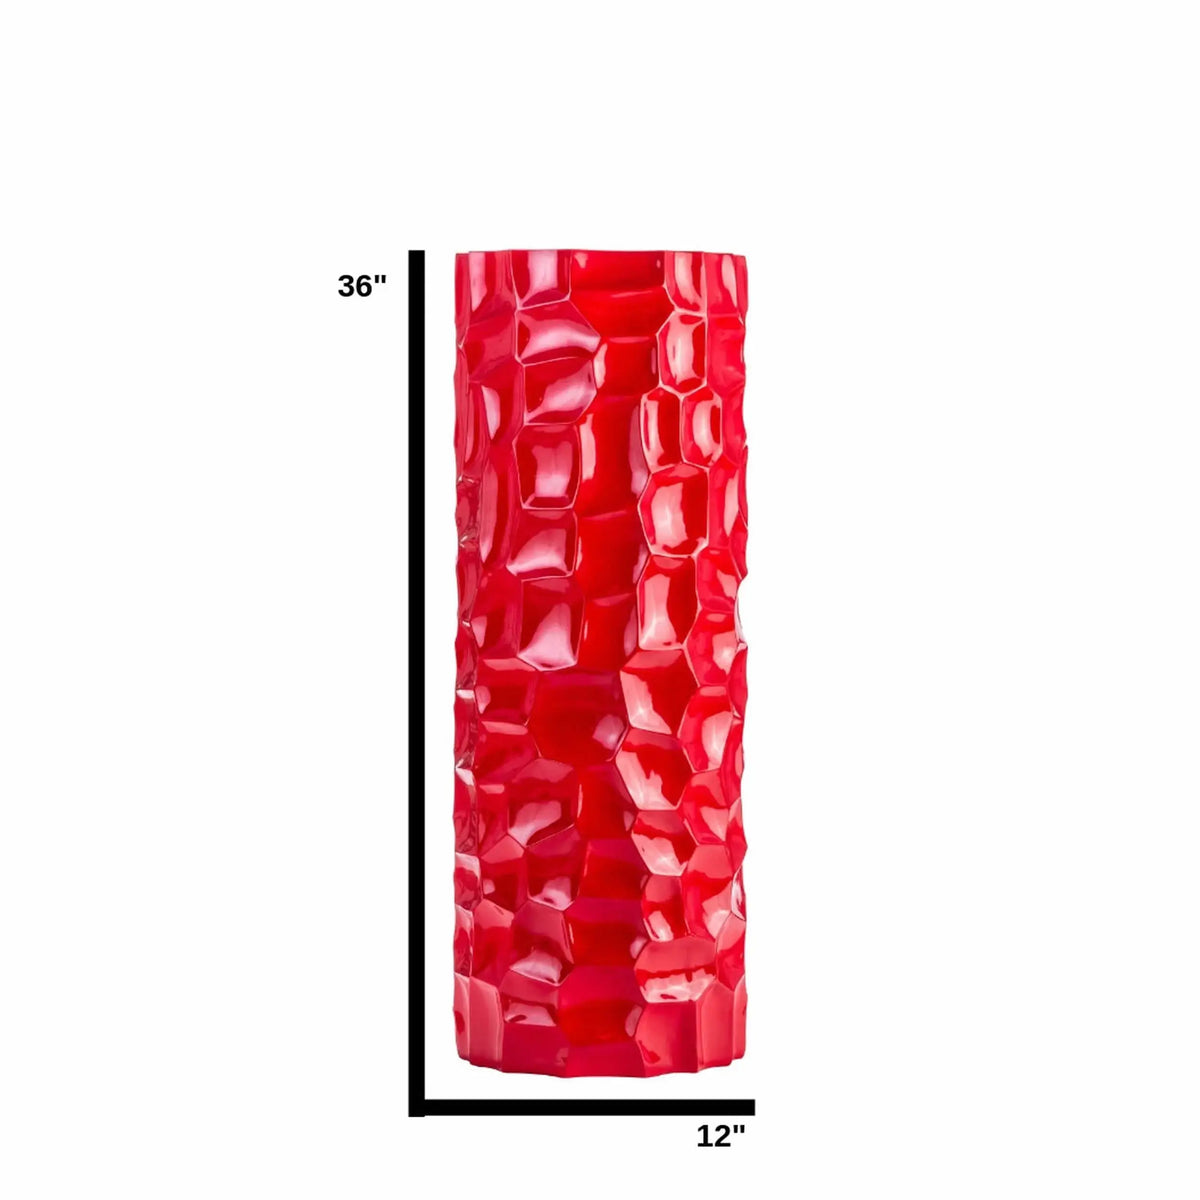 Honeycomb Textured 36" Vase in Red